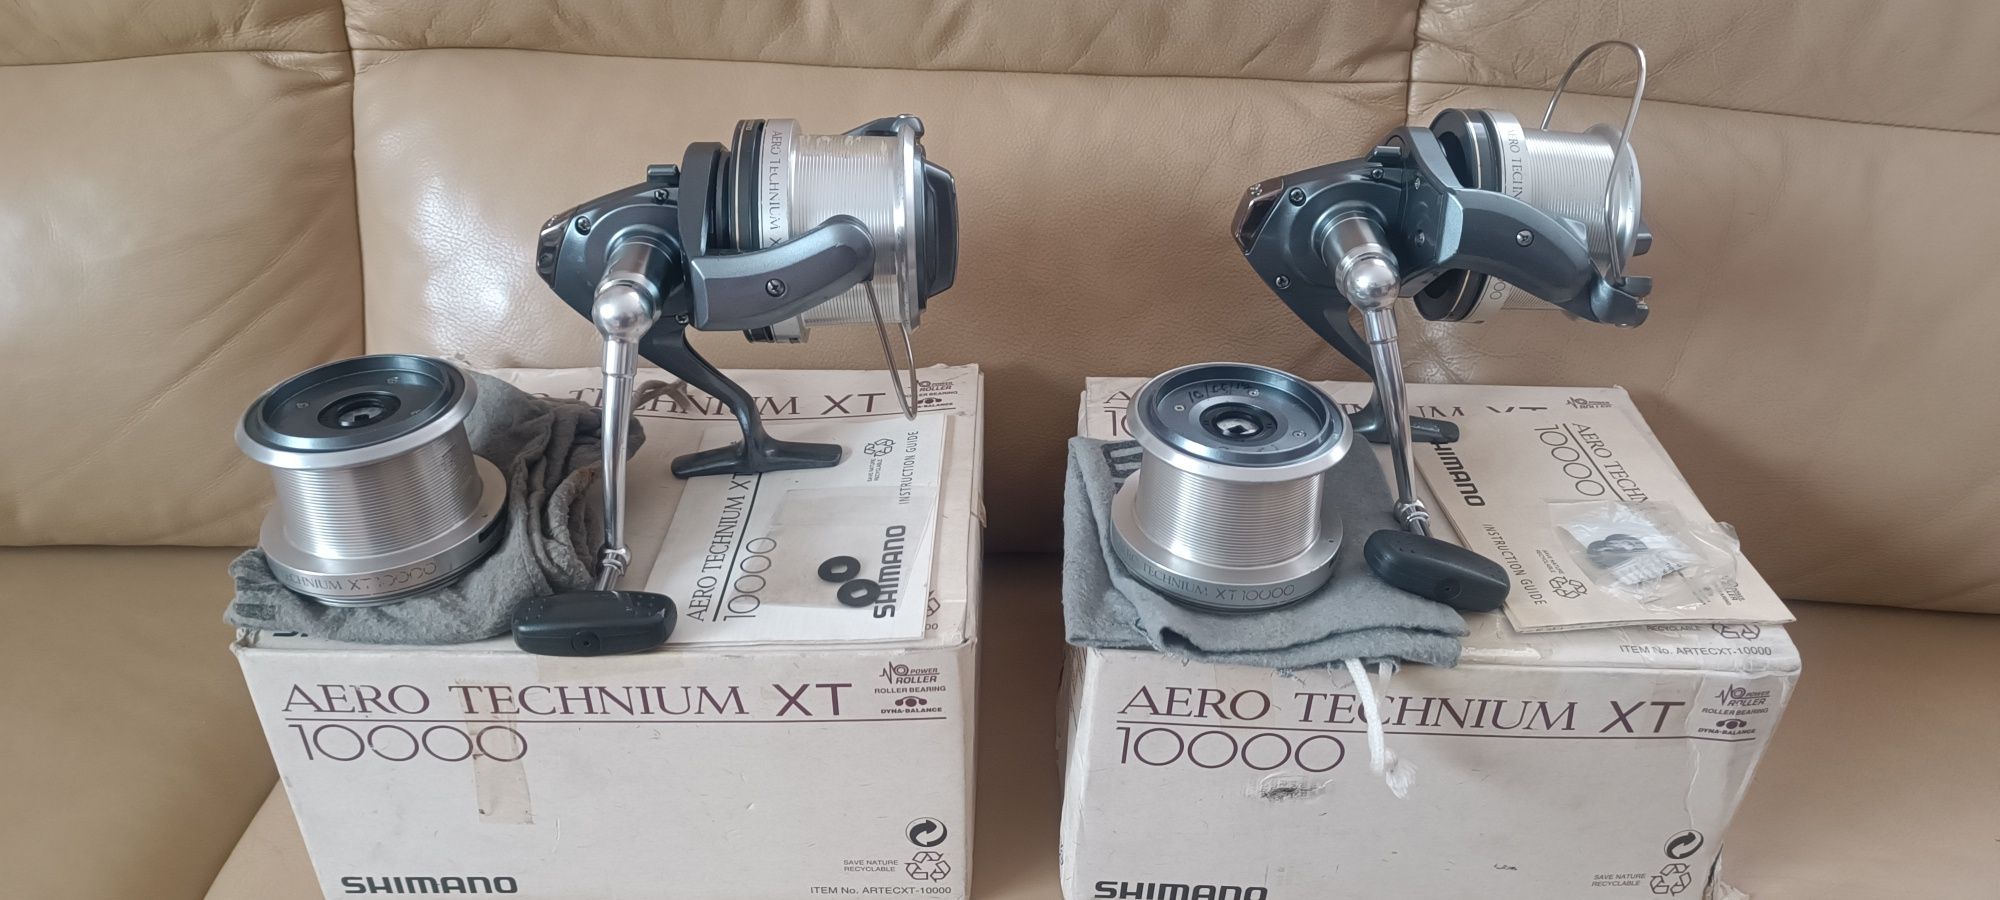 Shimano aero technium 10000 XT